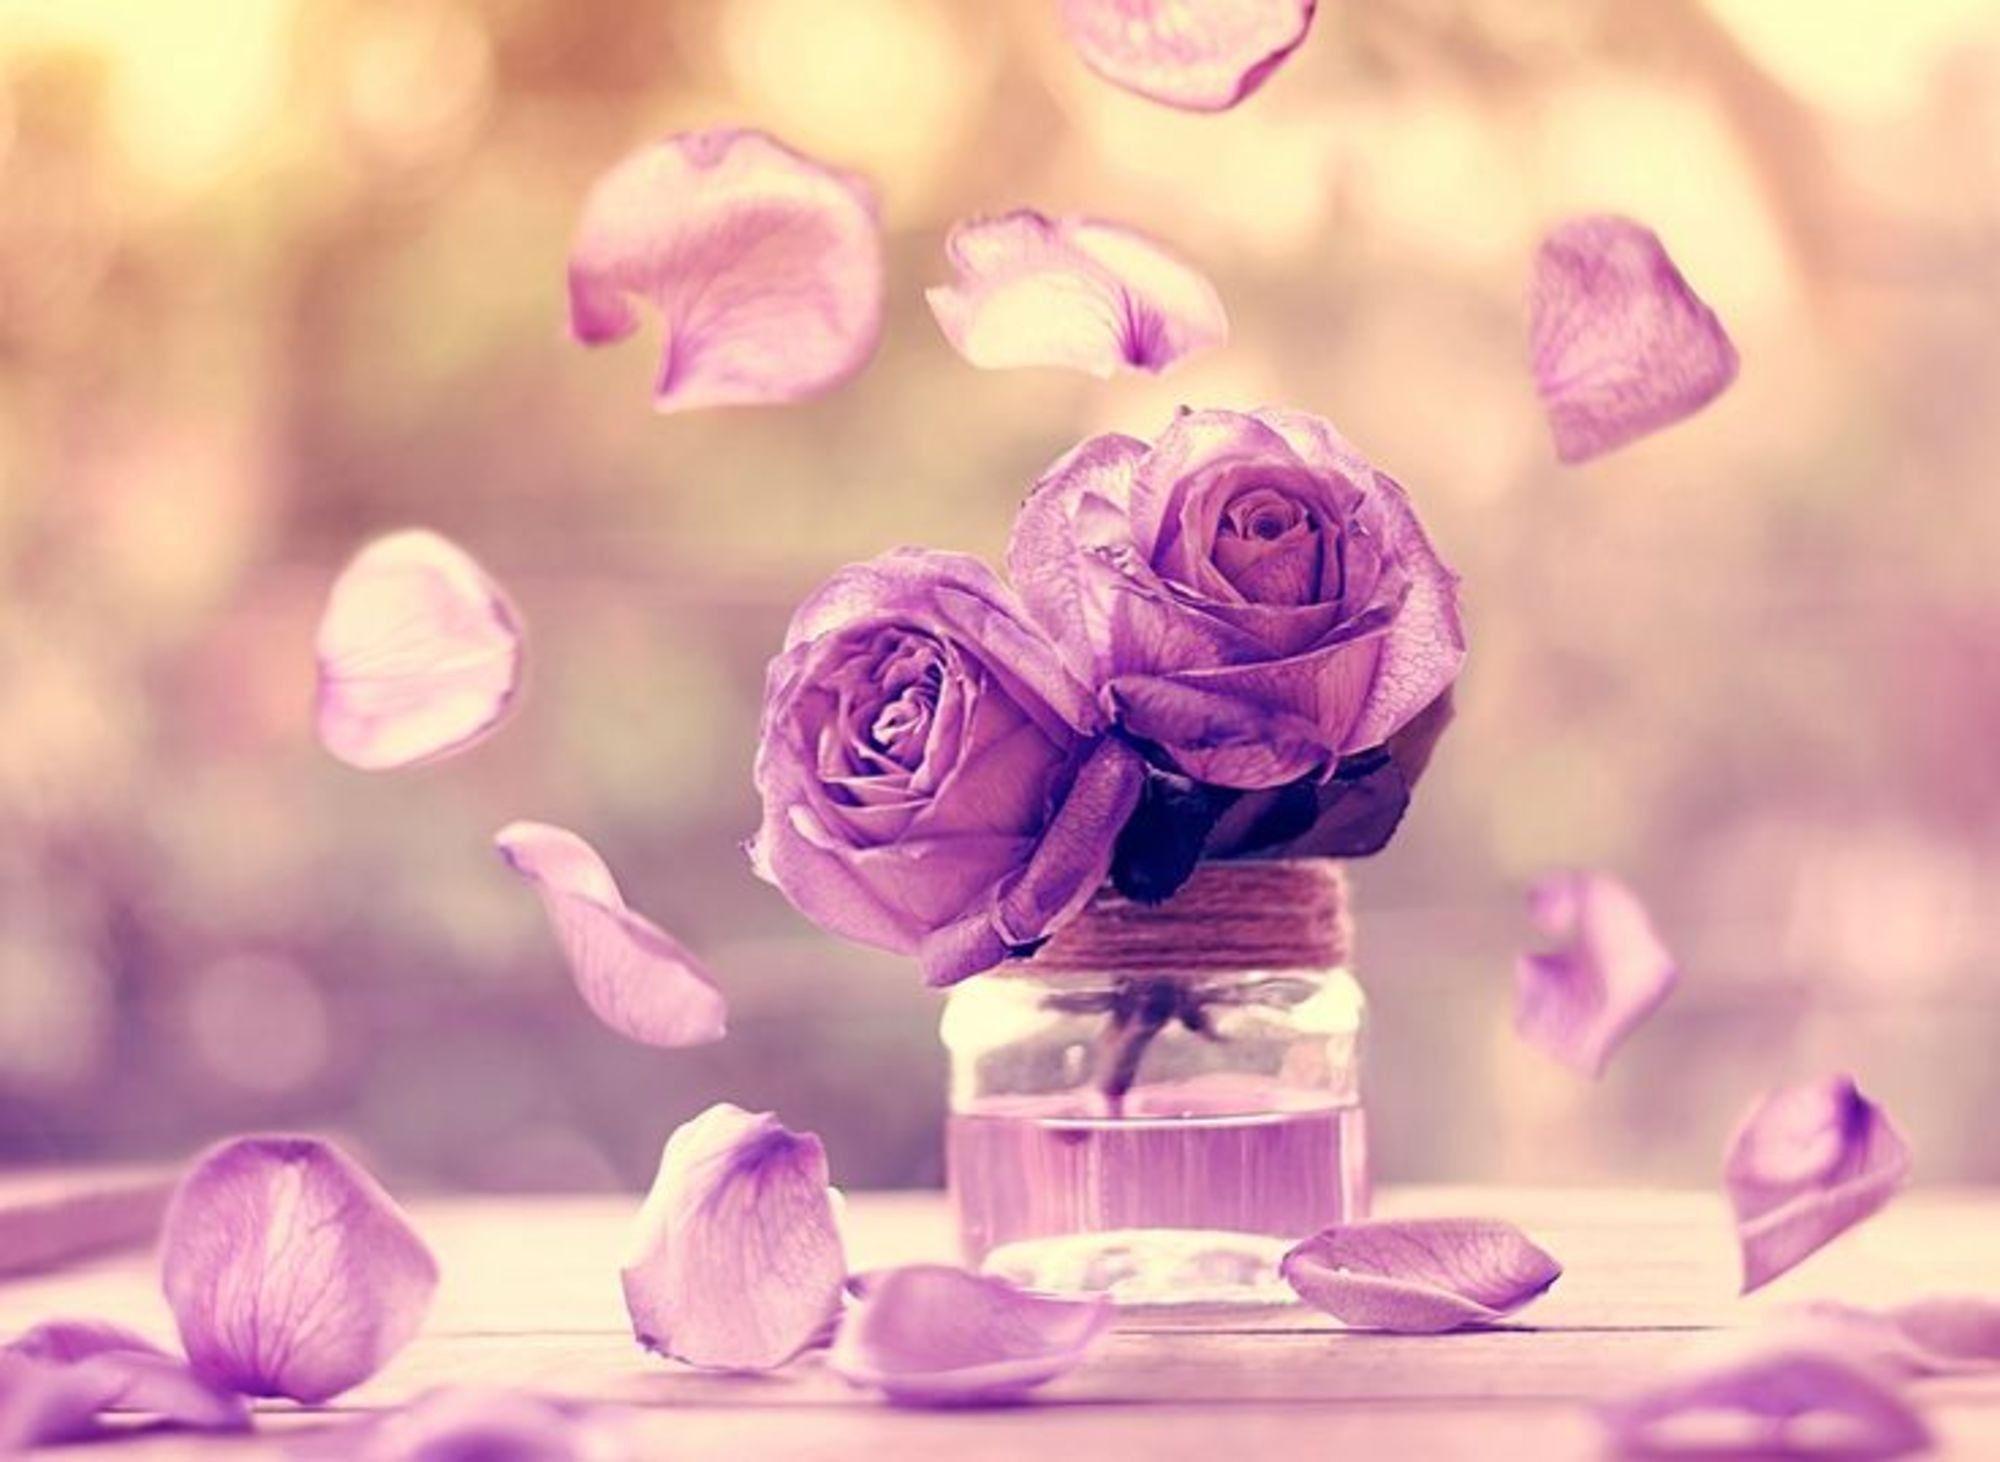 Flowers: Romance Op Beautiful Life Petals Vase Pink Roses High